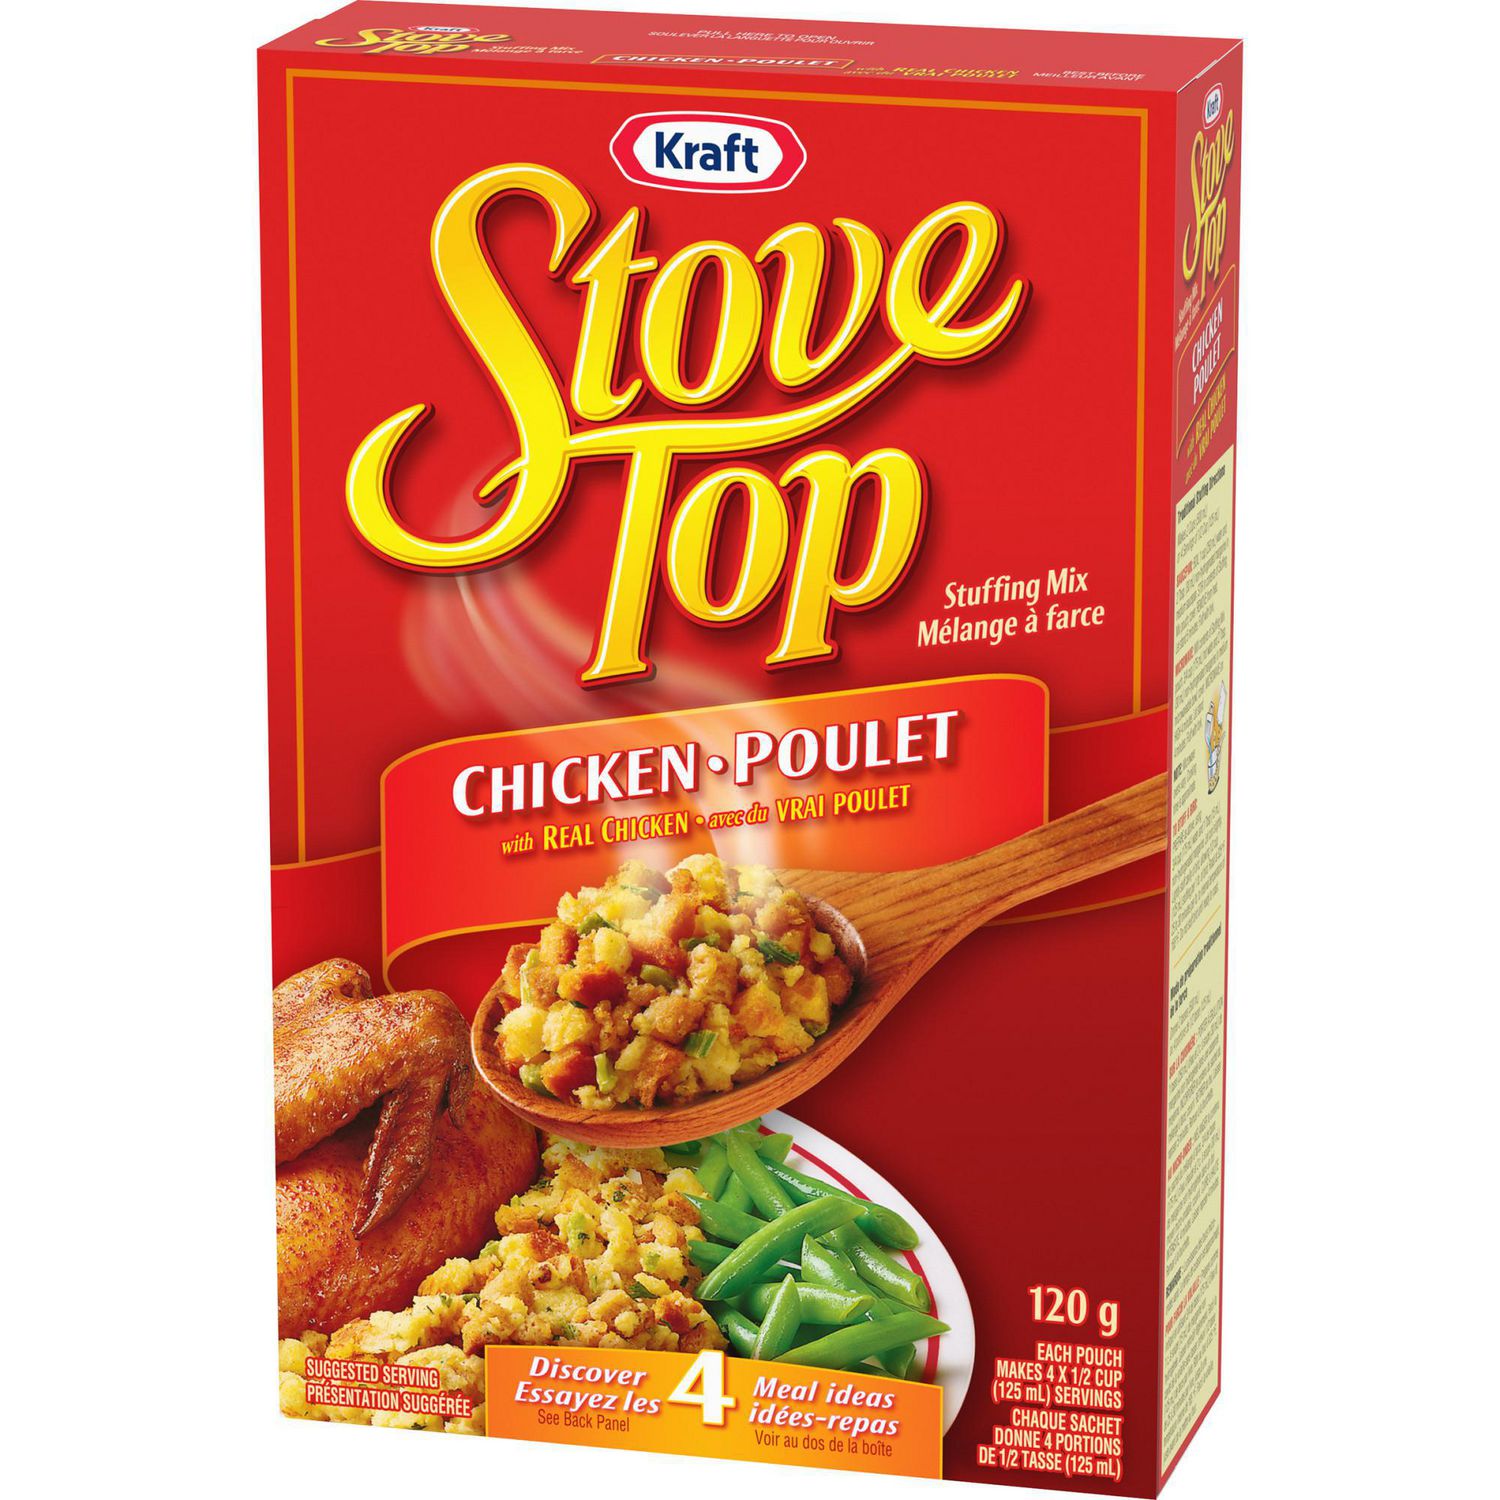 Stove Top Easy Chicken Bake Recipe Stove Top Bruschetta Chicken Bake Stove...